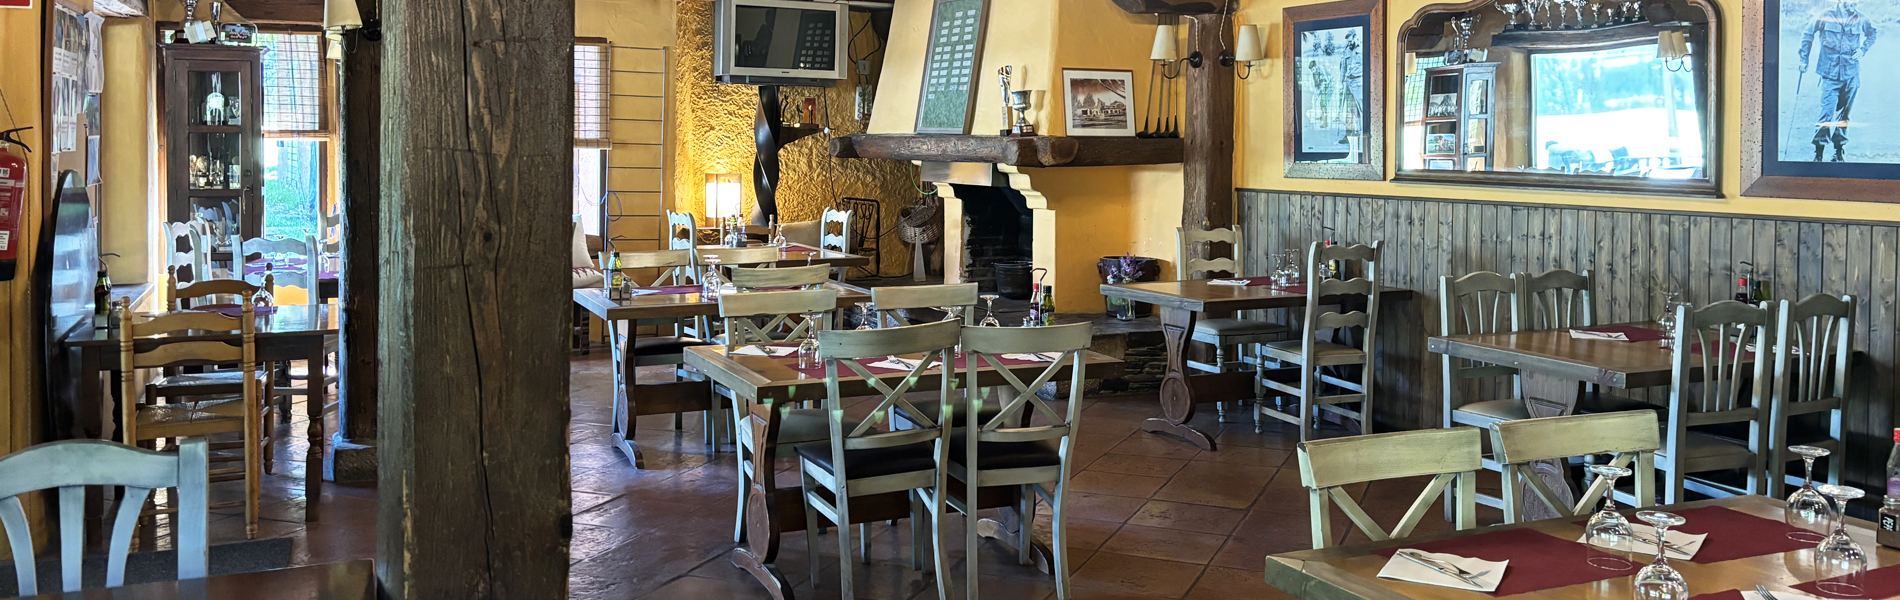 Restaurant Golf Urgell